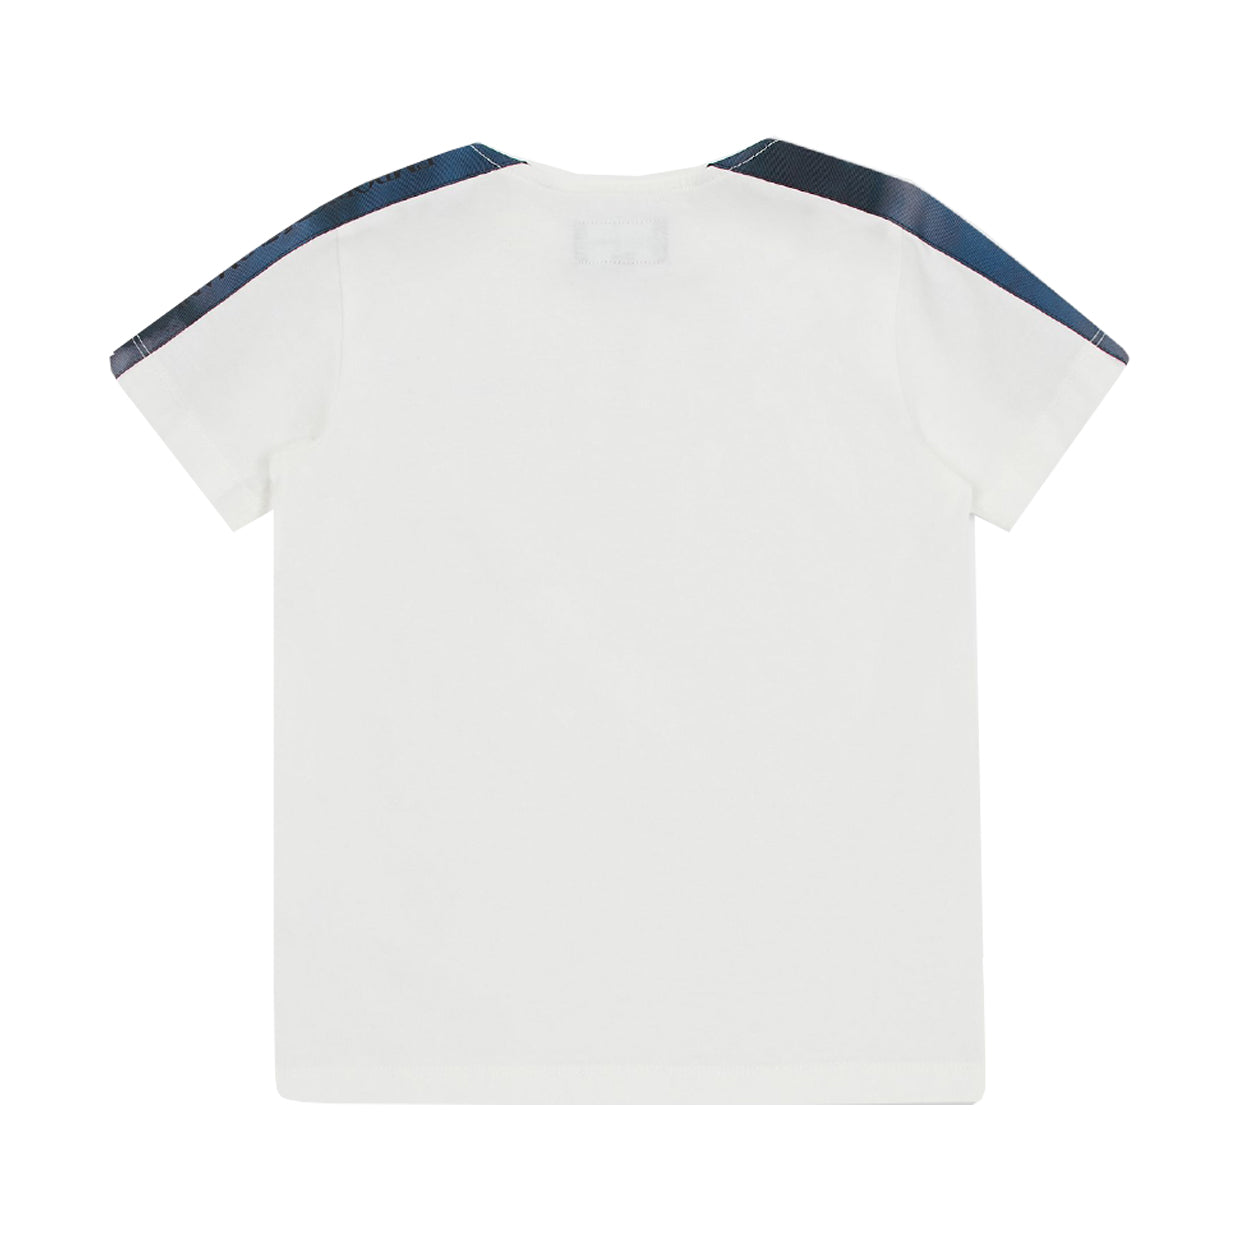 Armani Junior White Contrast Branding T-shirt